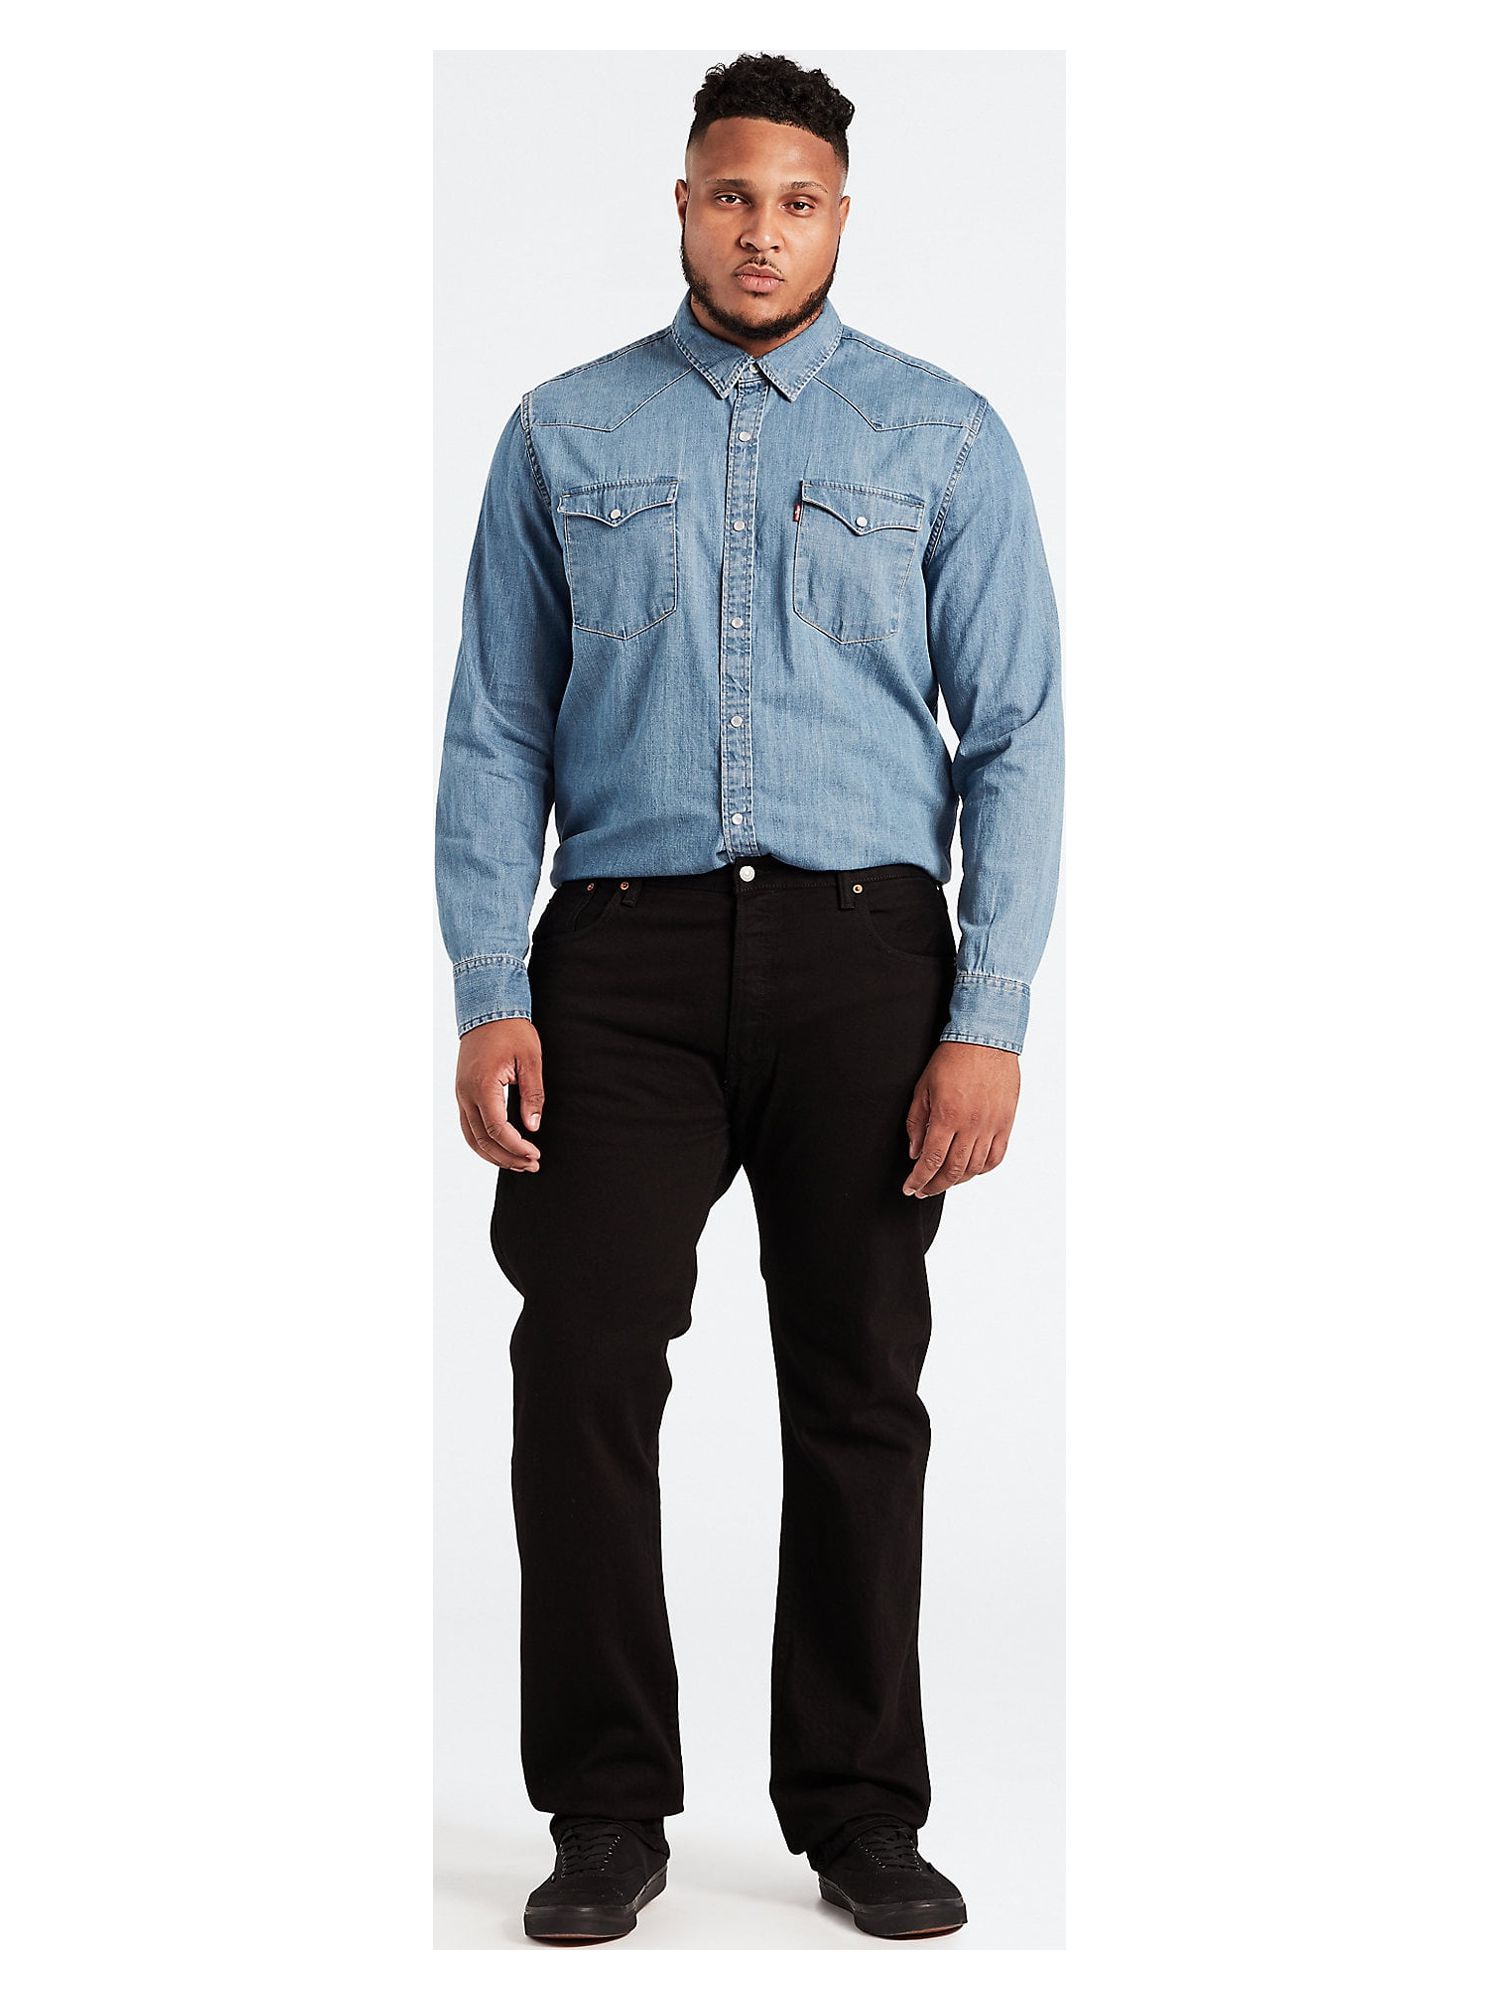 Levi's Men's Big & Tall 501 Original Fit Jeans - image 5 of 8